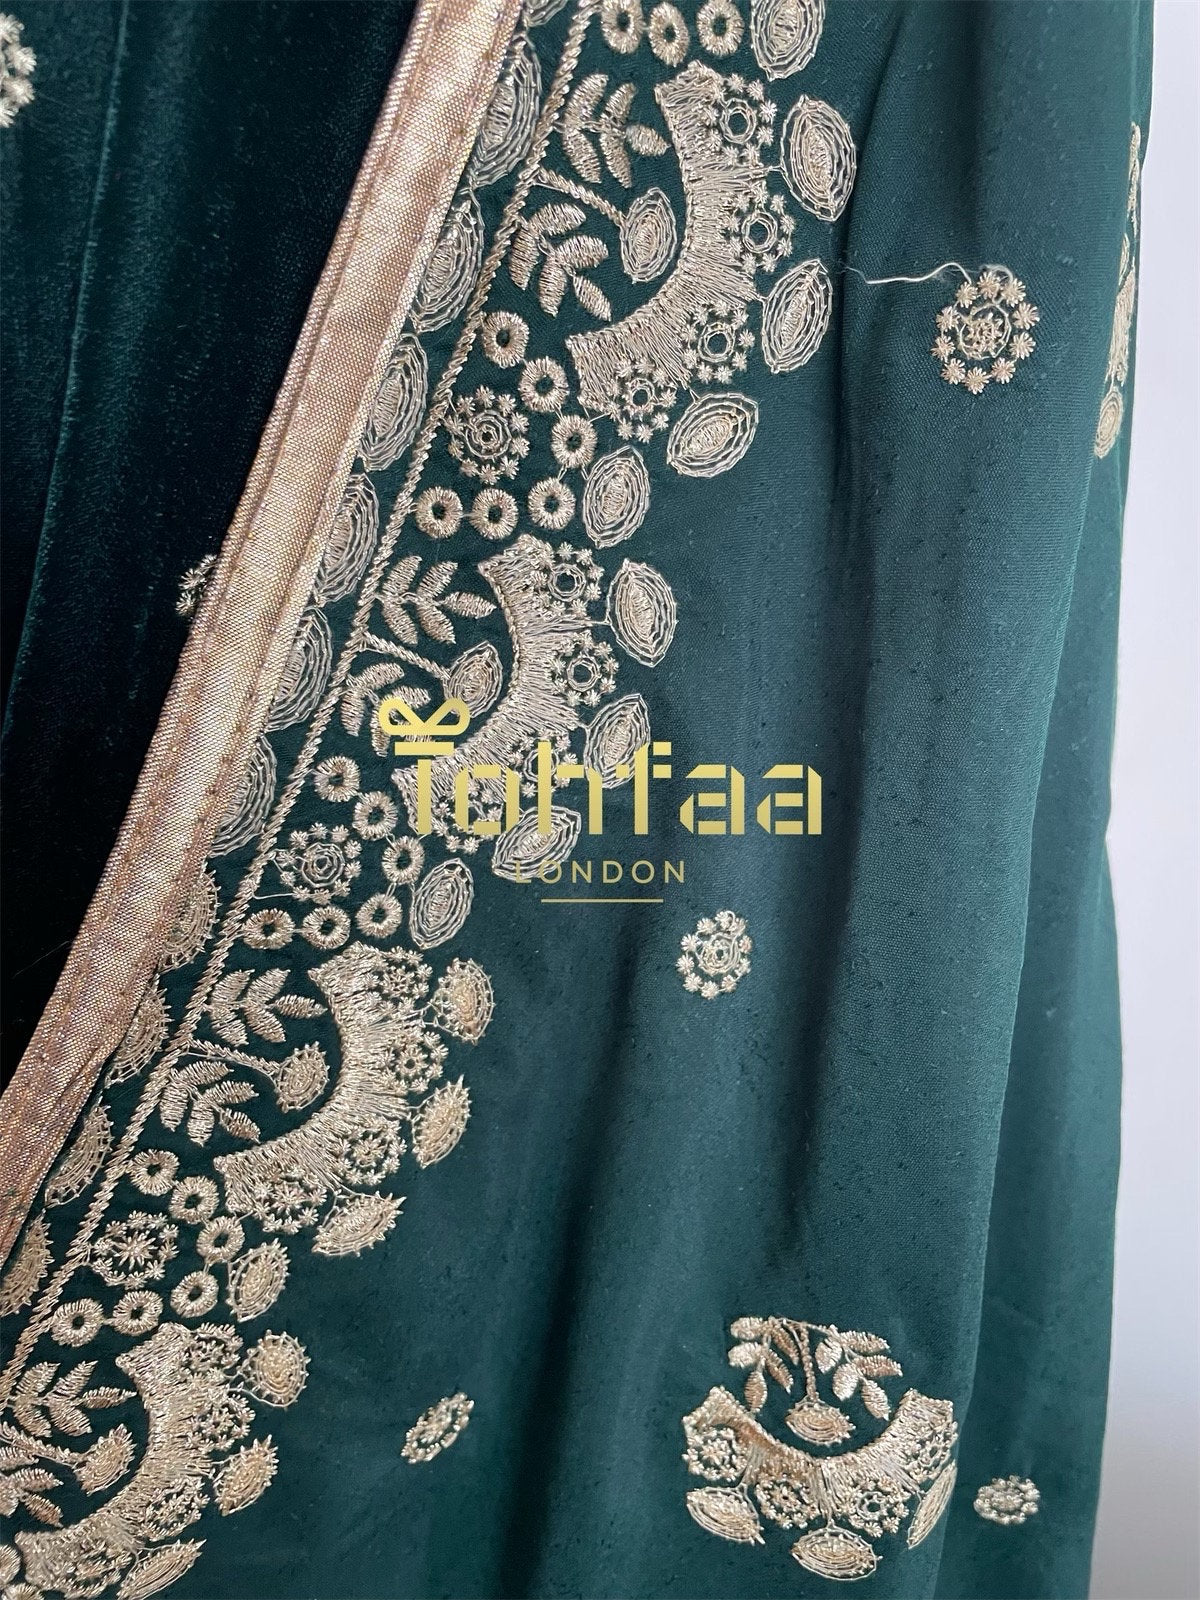 Dark Green Colour Velvet Embroidered Shawl Chaddar Duppattas for Winters Weddings dressing update Salwar Kameez Lehengas Kurtis